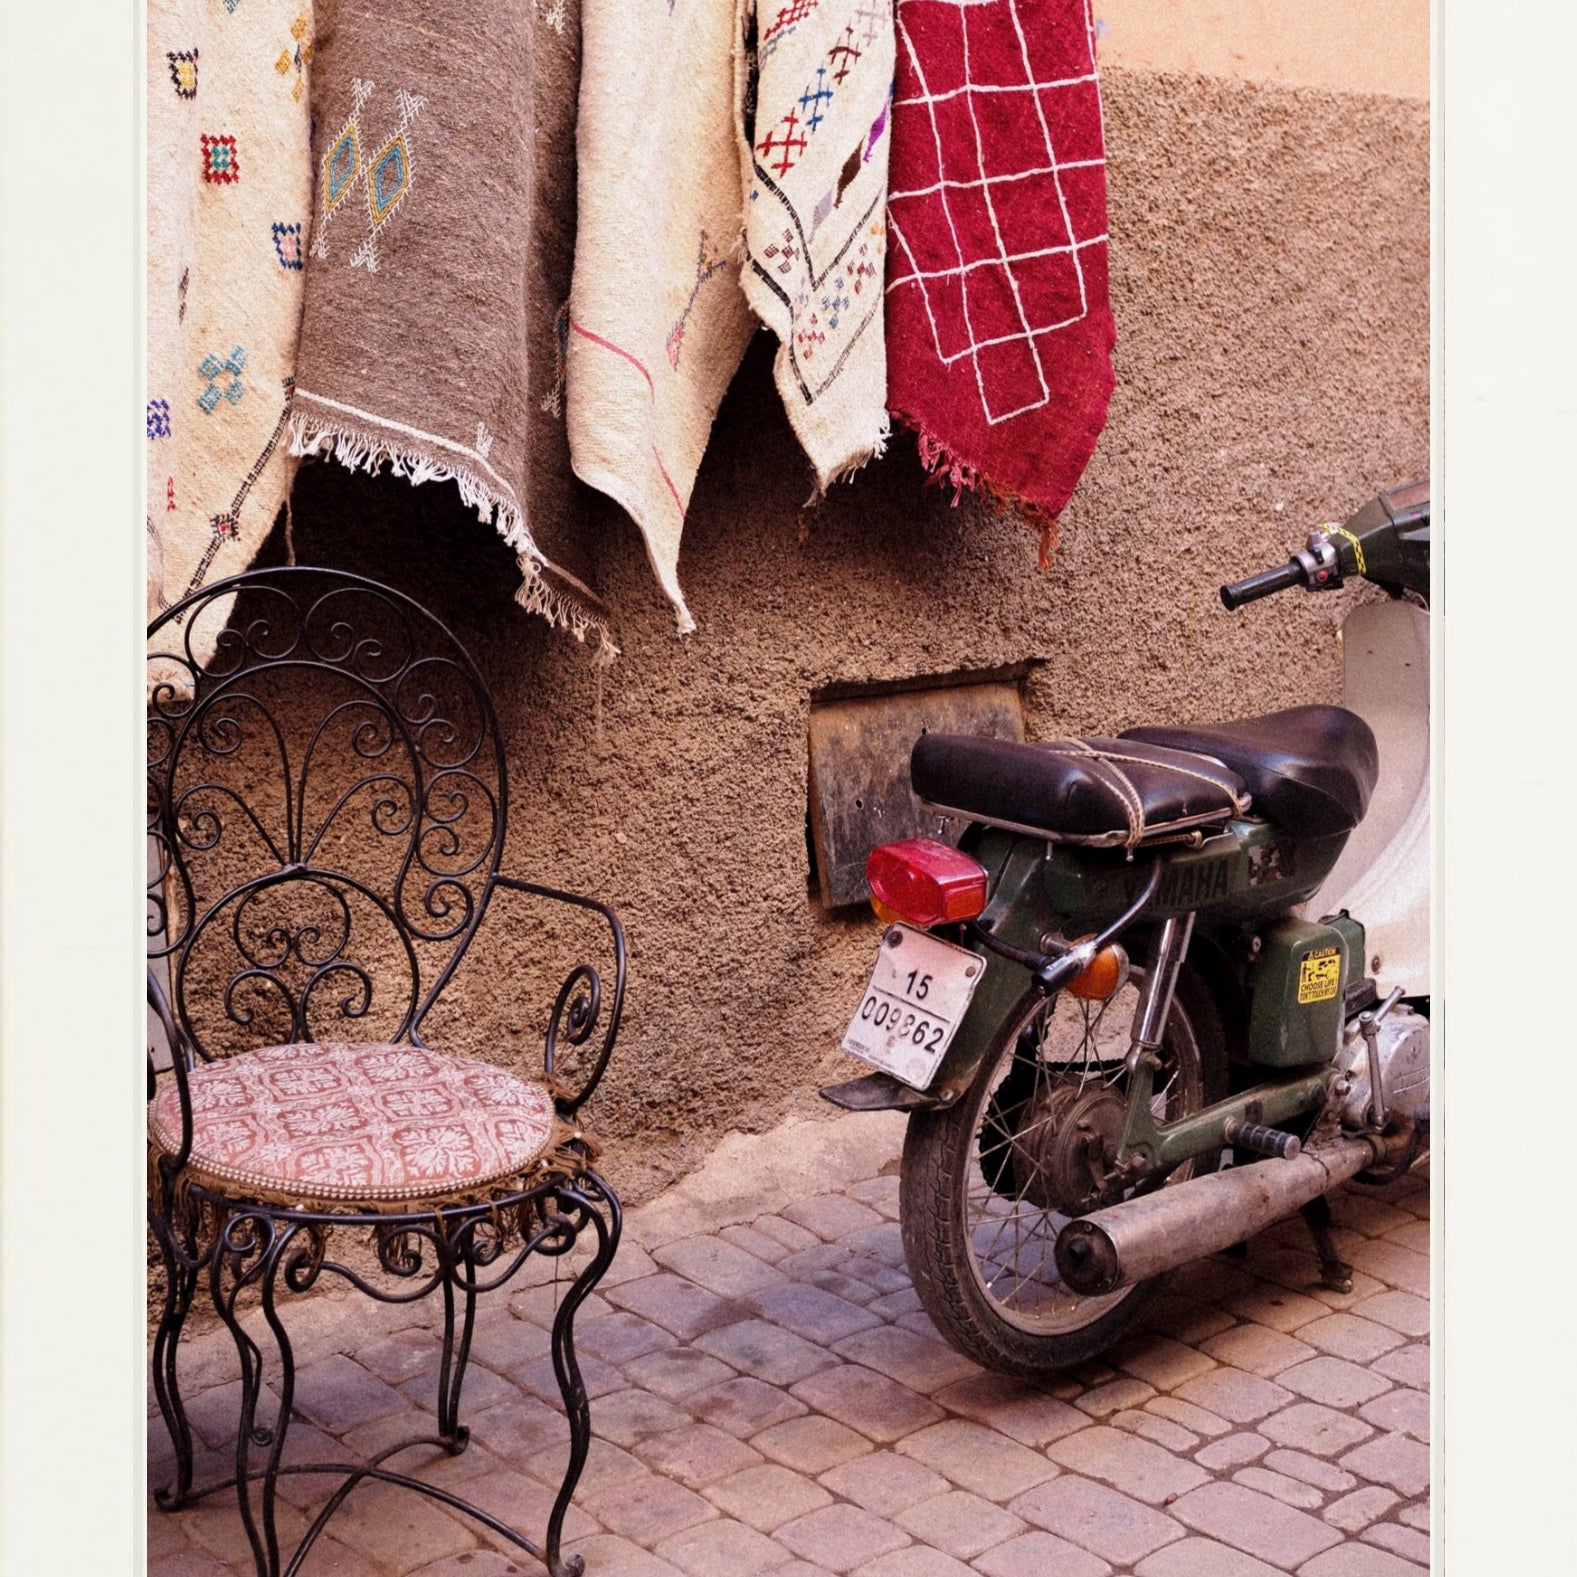 Marrakech Medina Printed Photograph - elsie green